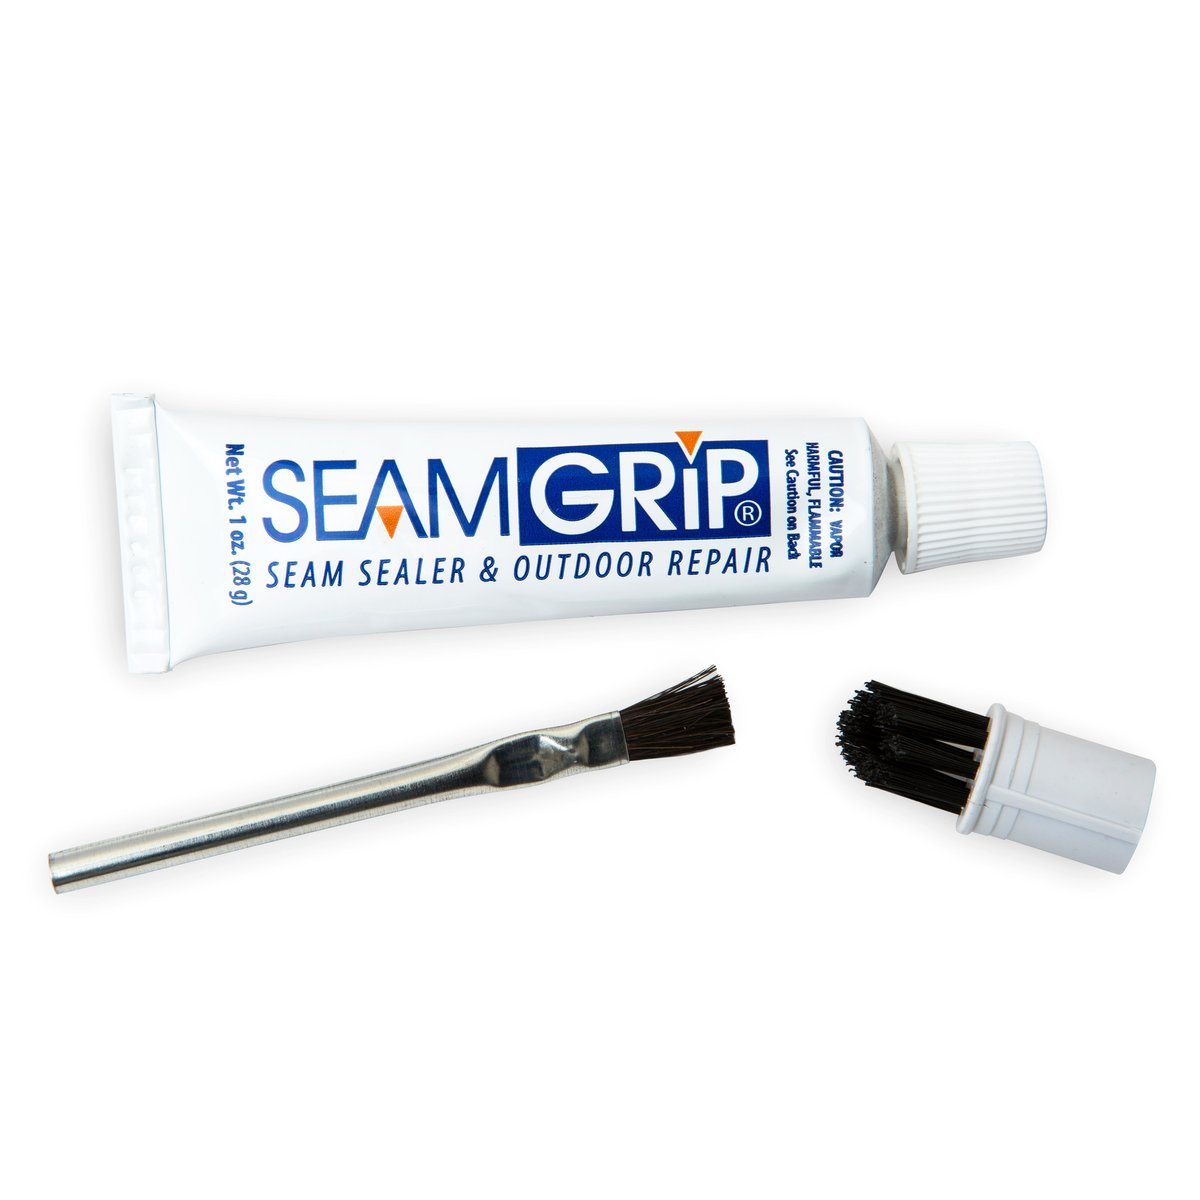 Seam Grip Seam Sealer – DIY Packraft